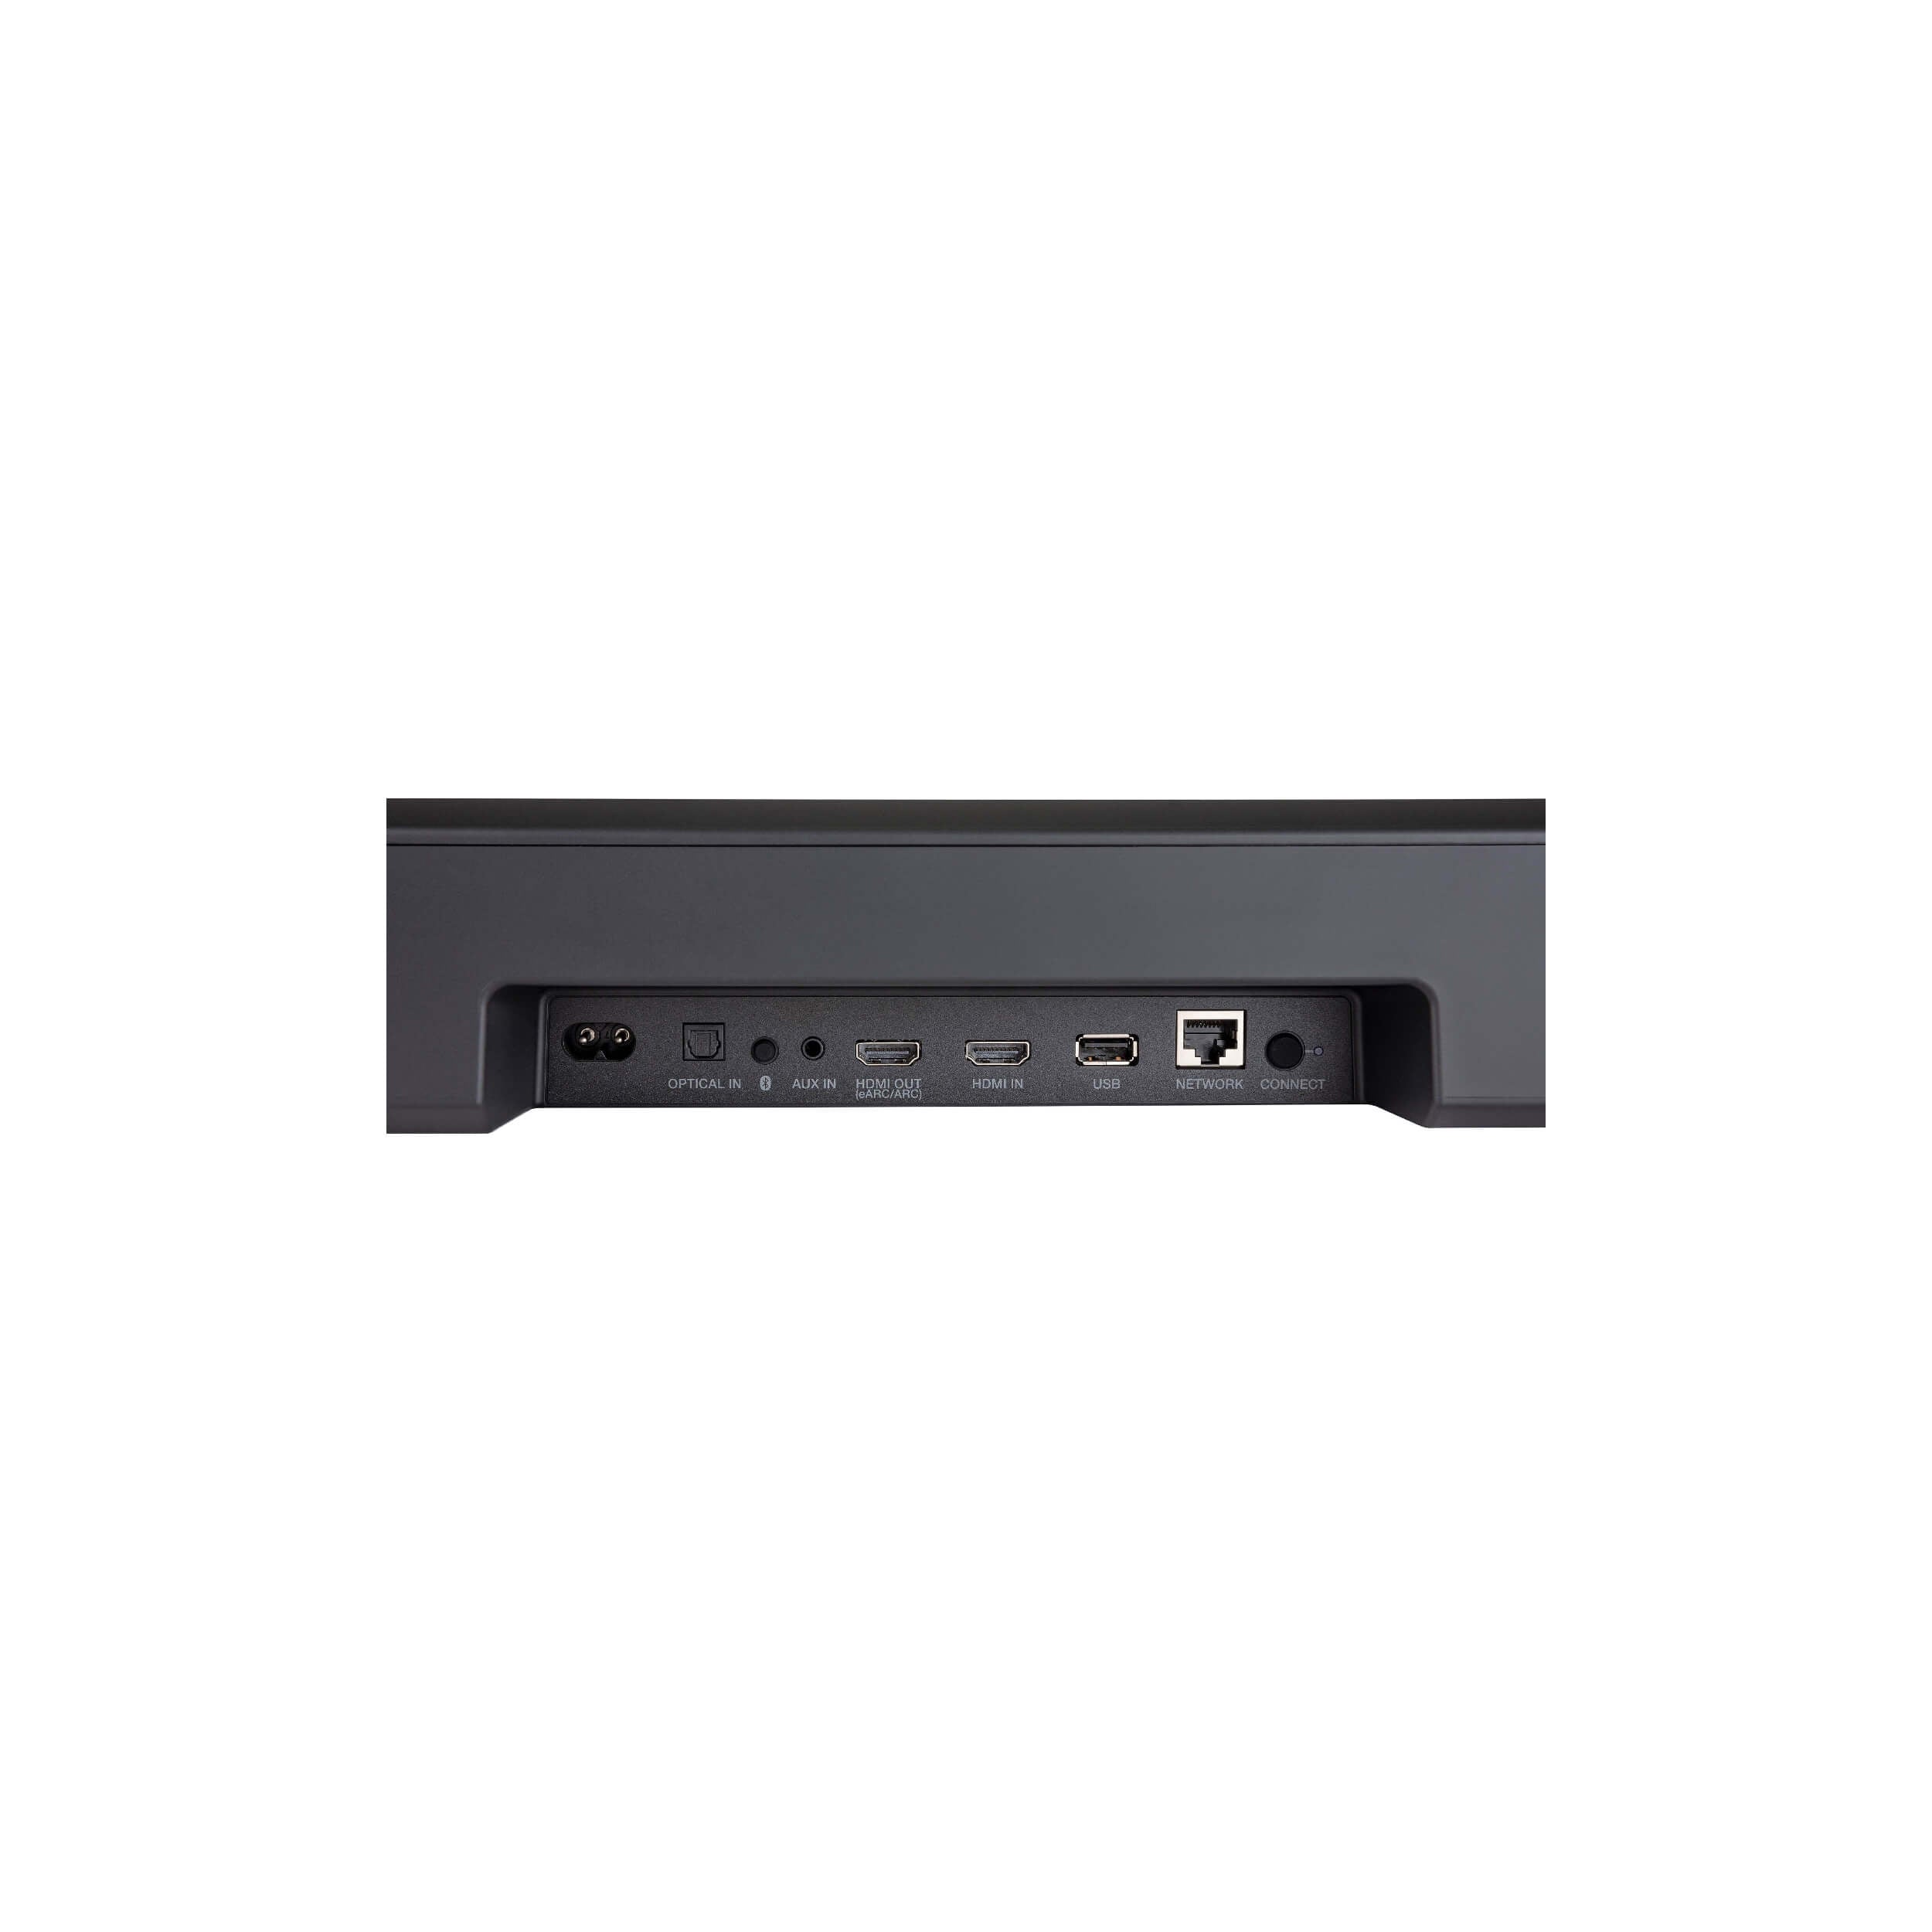 Denon Home Sound Bar SB550 Virtual 4-Channel Network Soundbar with HEOS